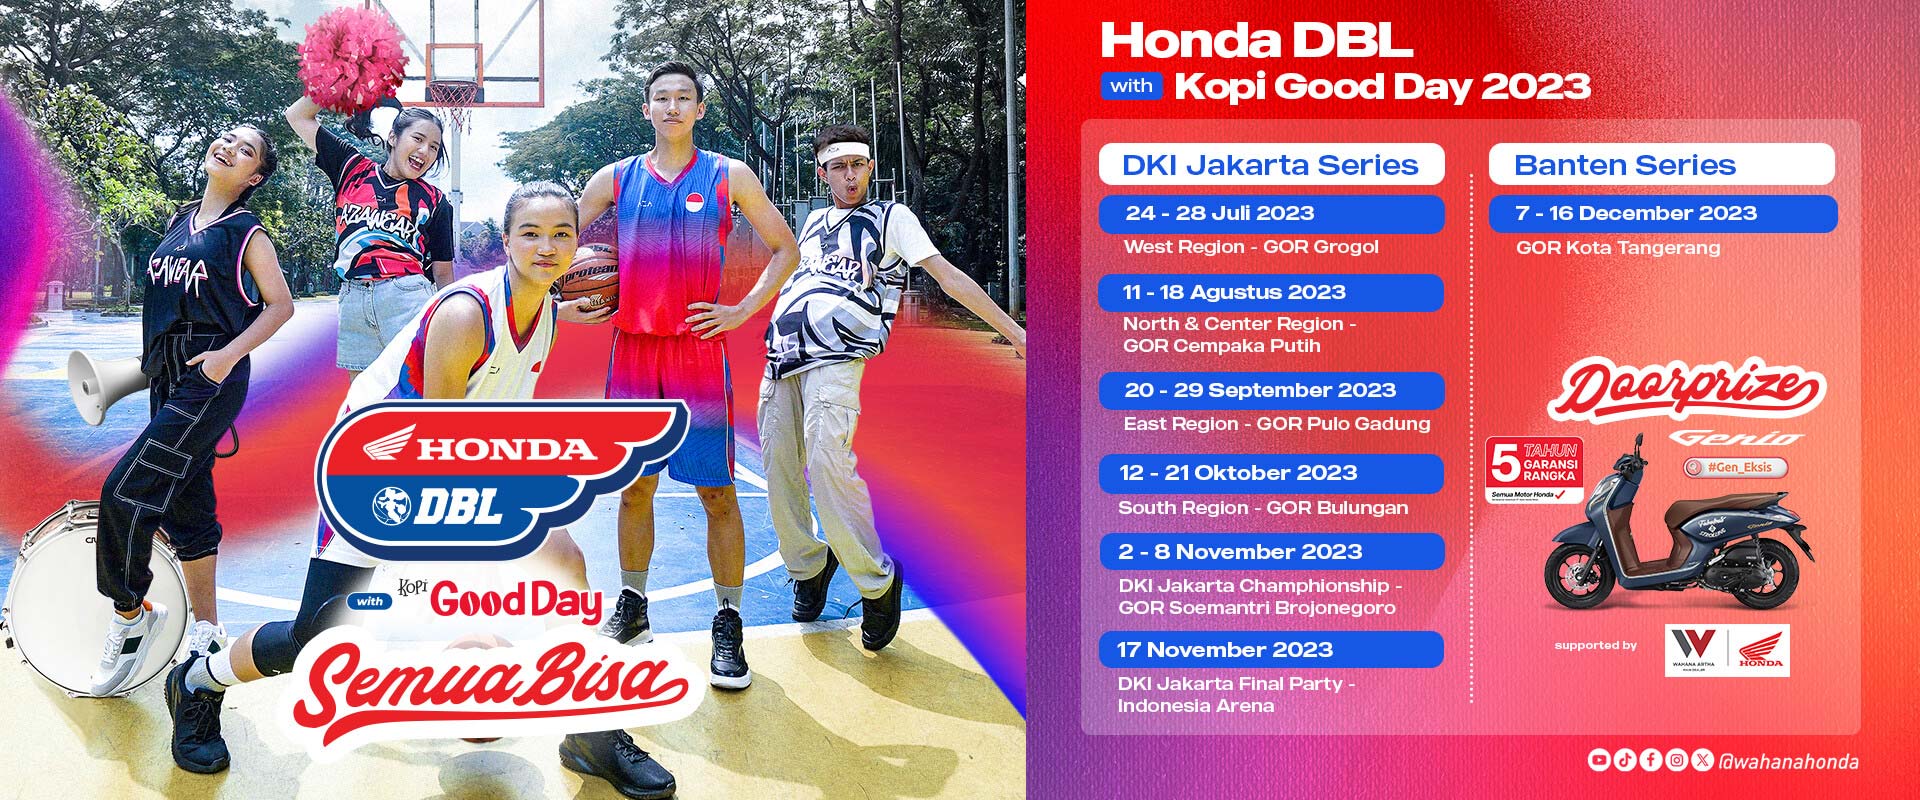 Honda DBL With Kopi Good Day 2023